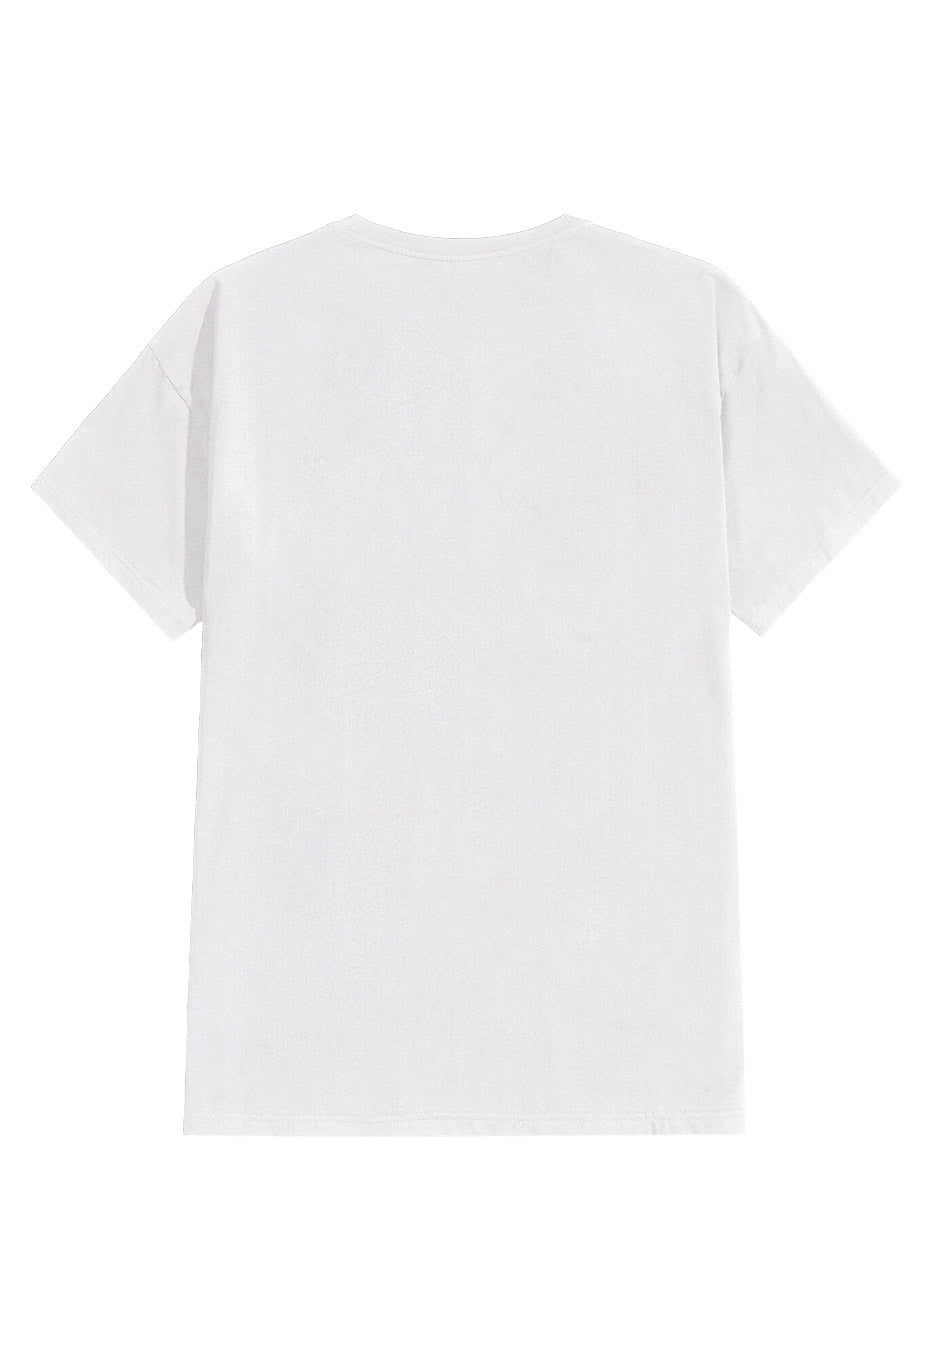 Hawkeye - Comic Page White - T-Shirt | Neutral-Image